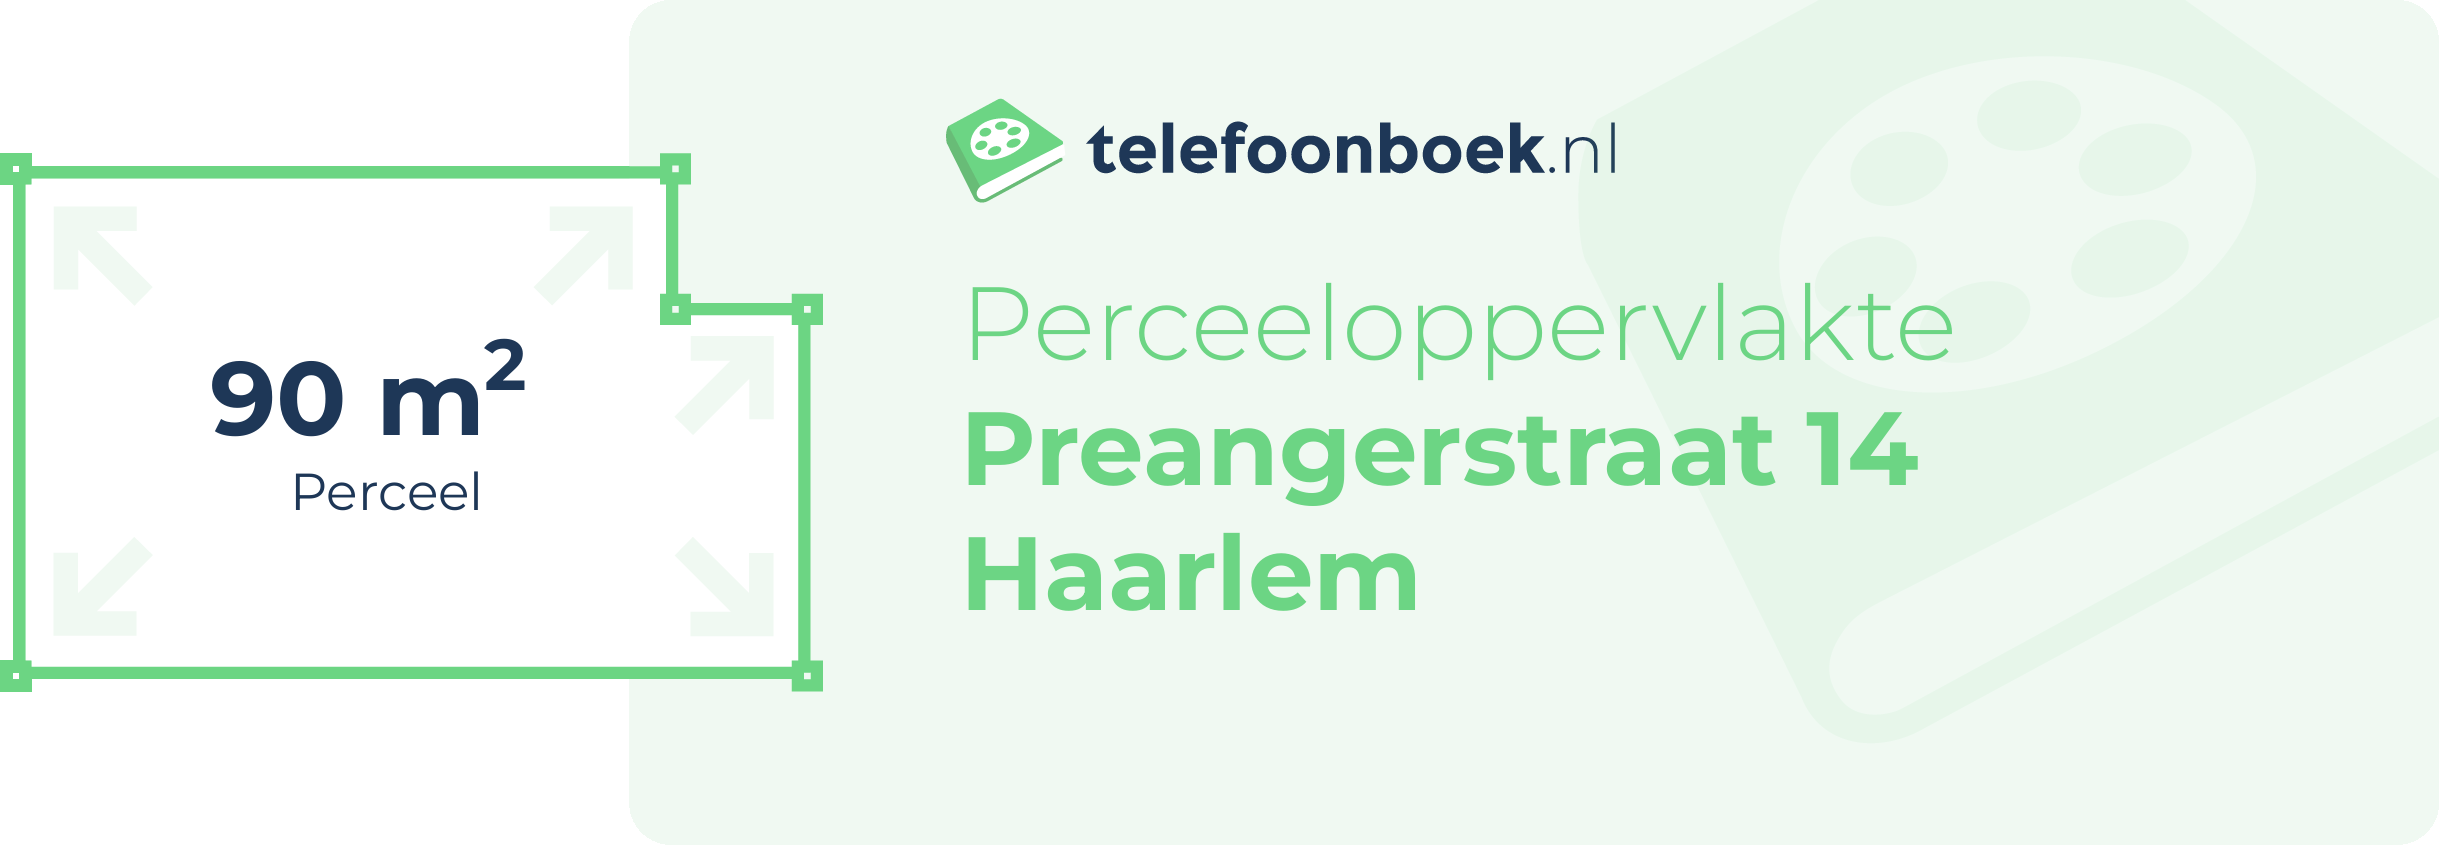 Perceeloppervlakte Preangerstraat 14 Haarlem